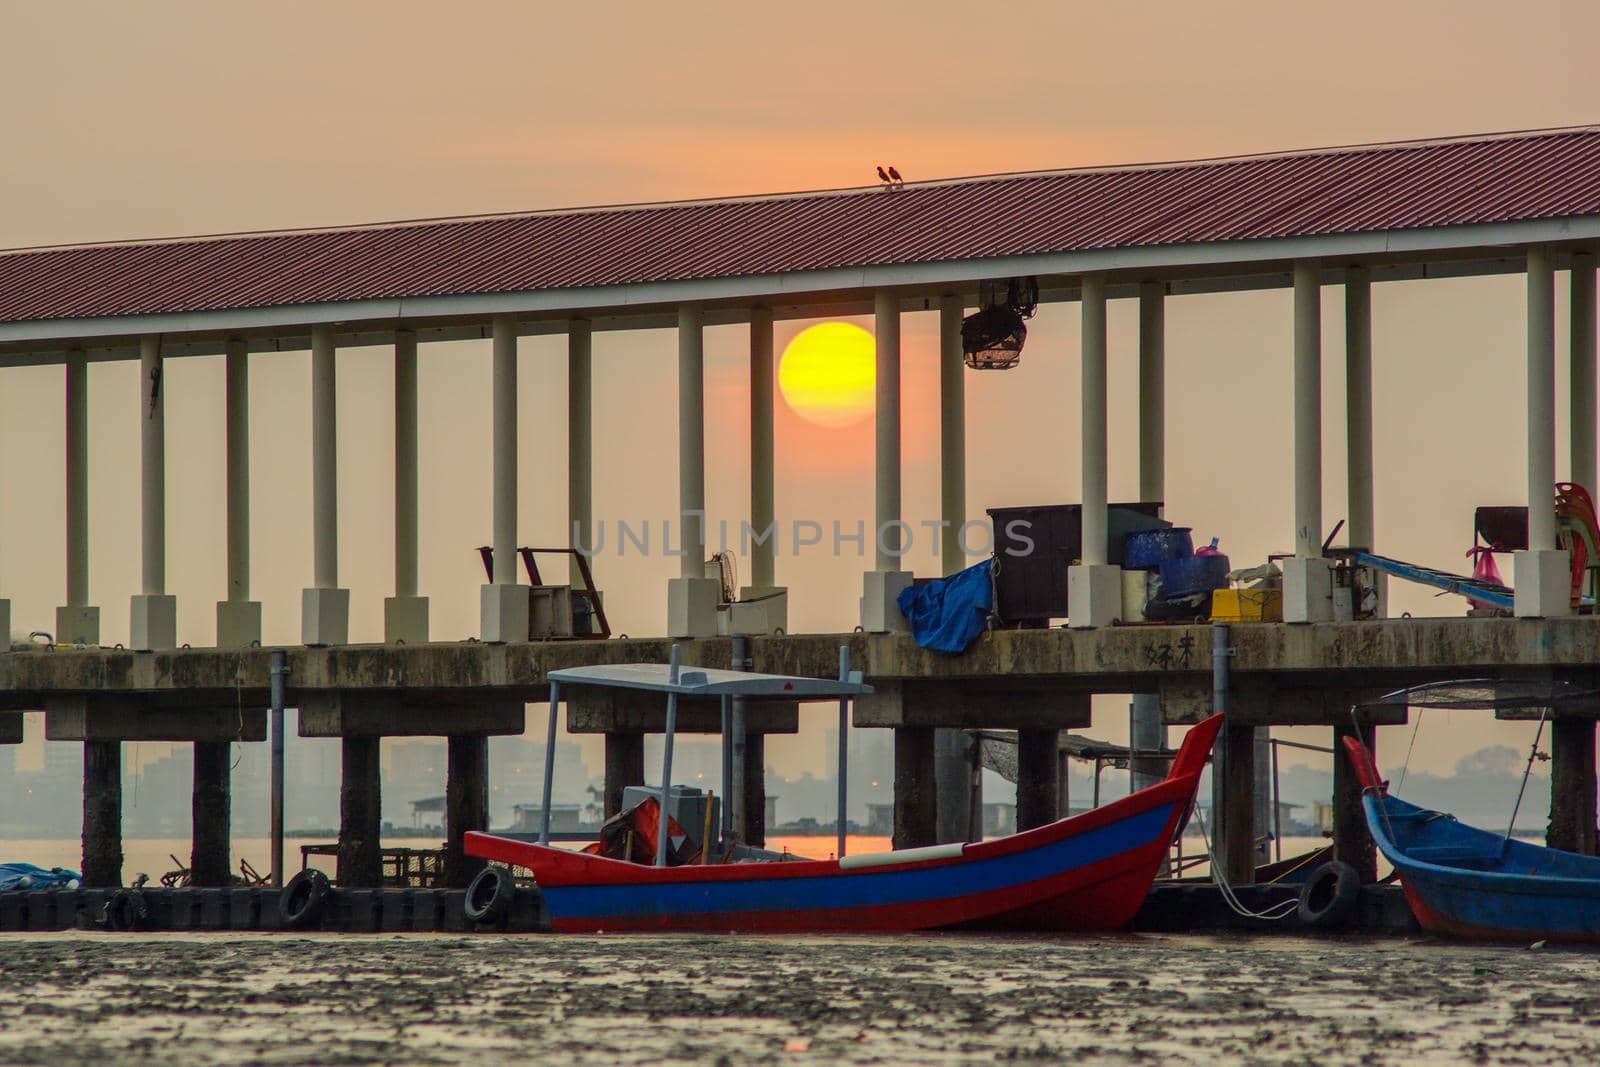 Georgetown, Penang/Malaysia - May 07 2016: Sunrise at Karpal Singh Drive fishing jetty.